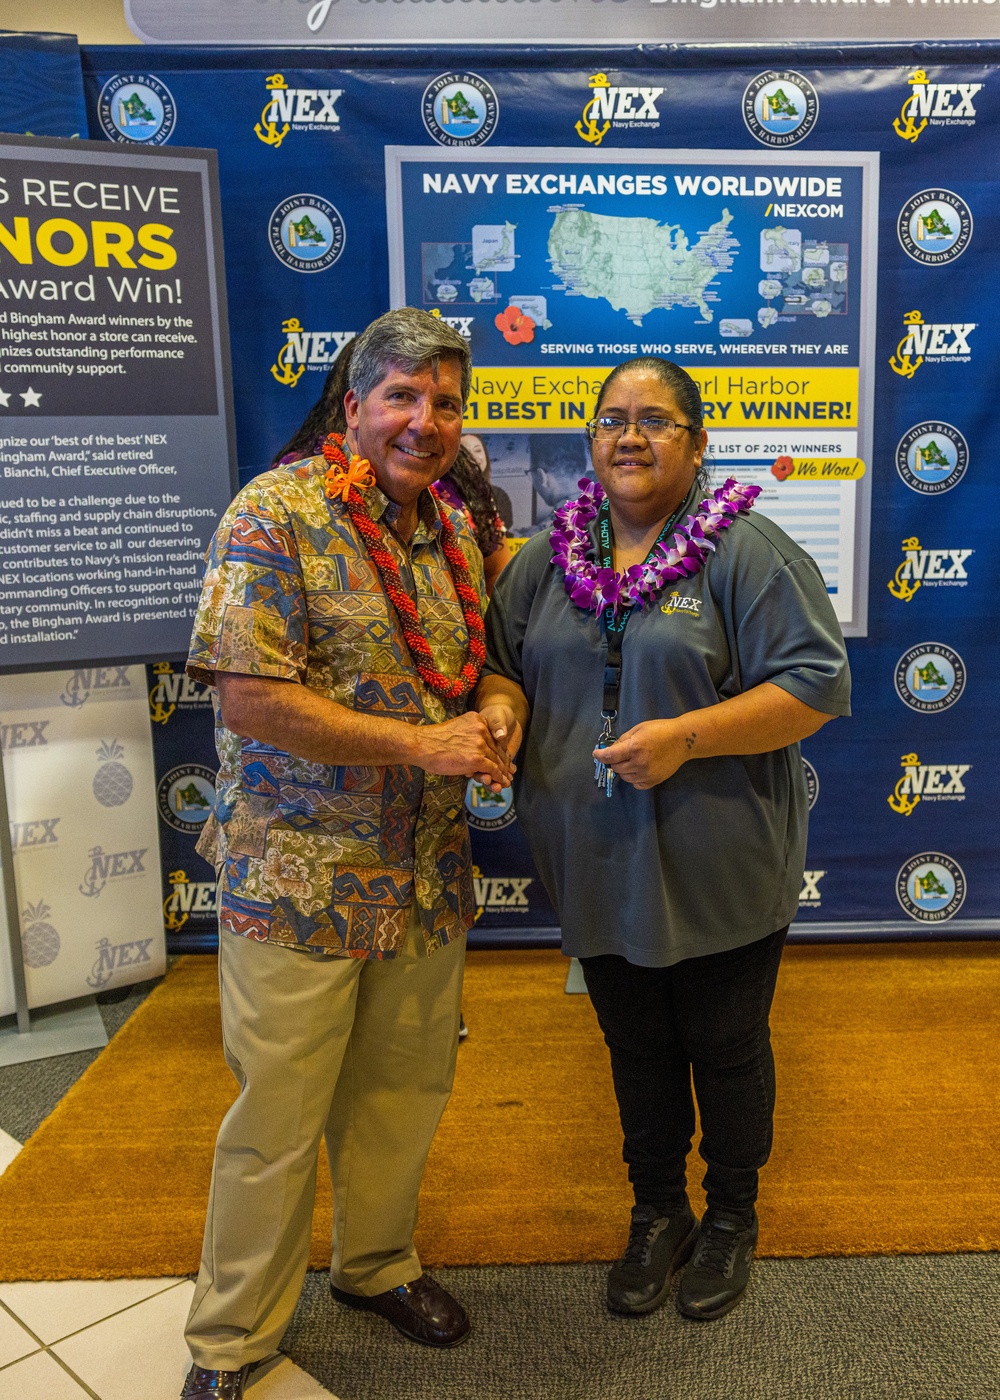 Navy Exchange Pearl Harbor wins Bingham Award